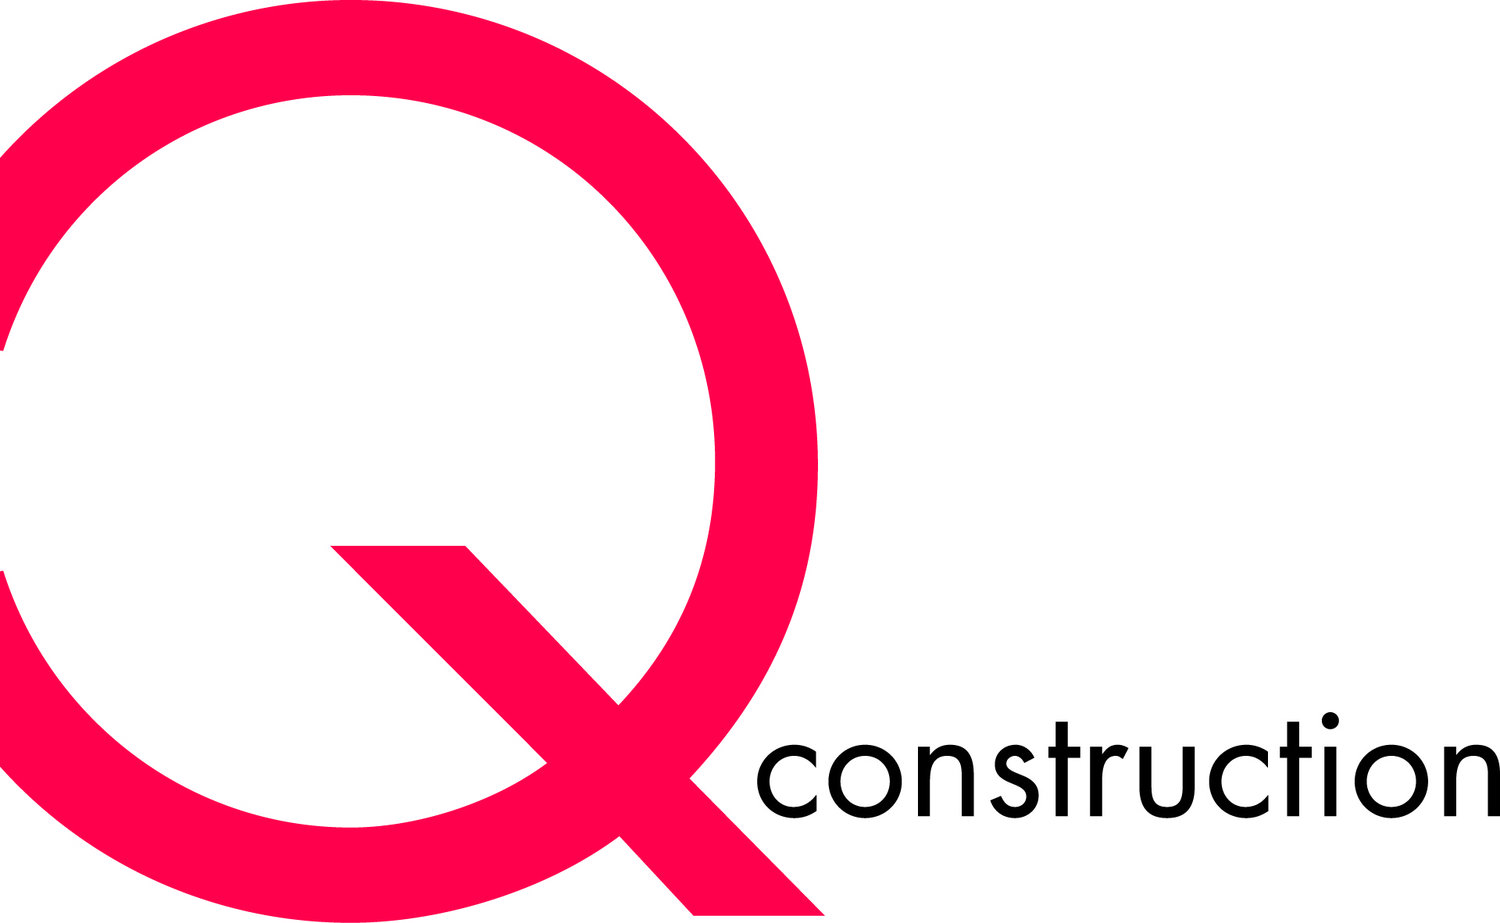 Q Construction